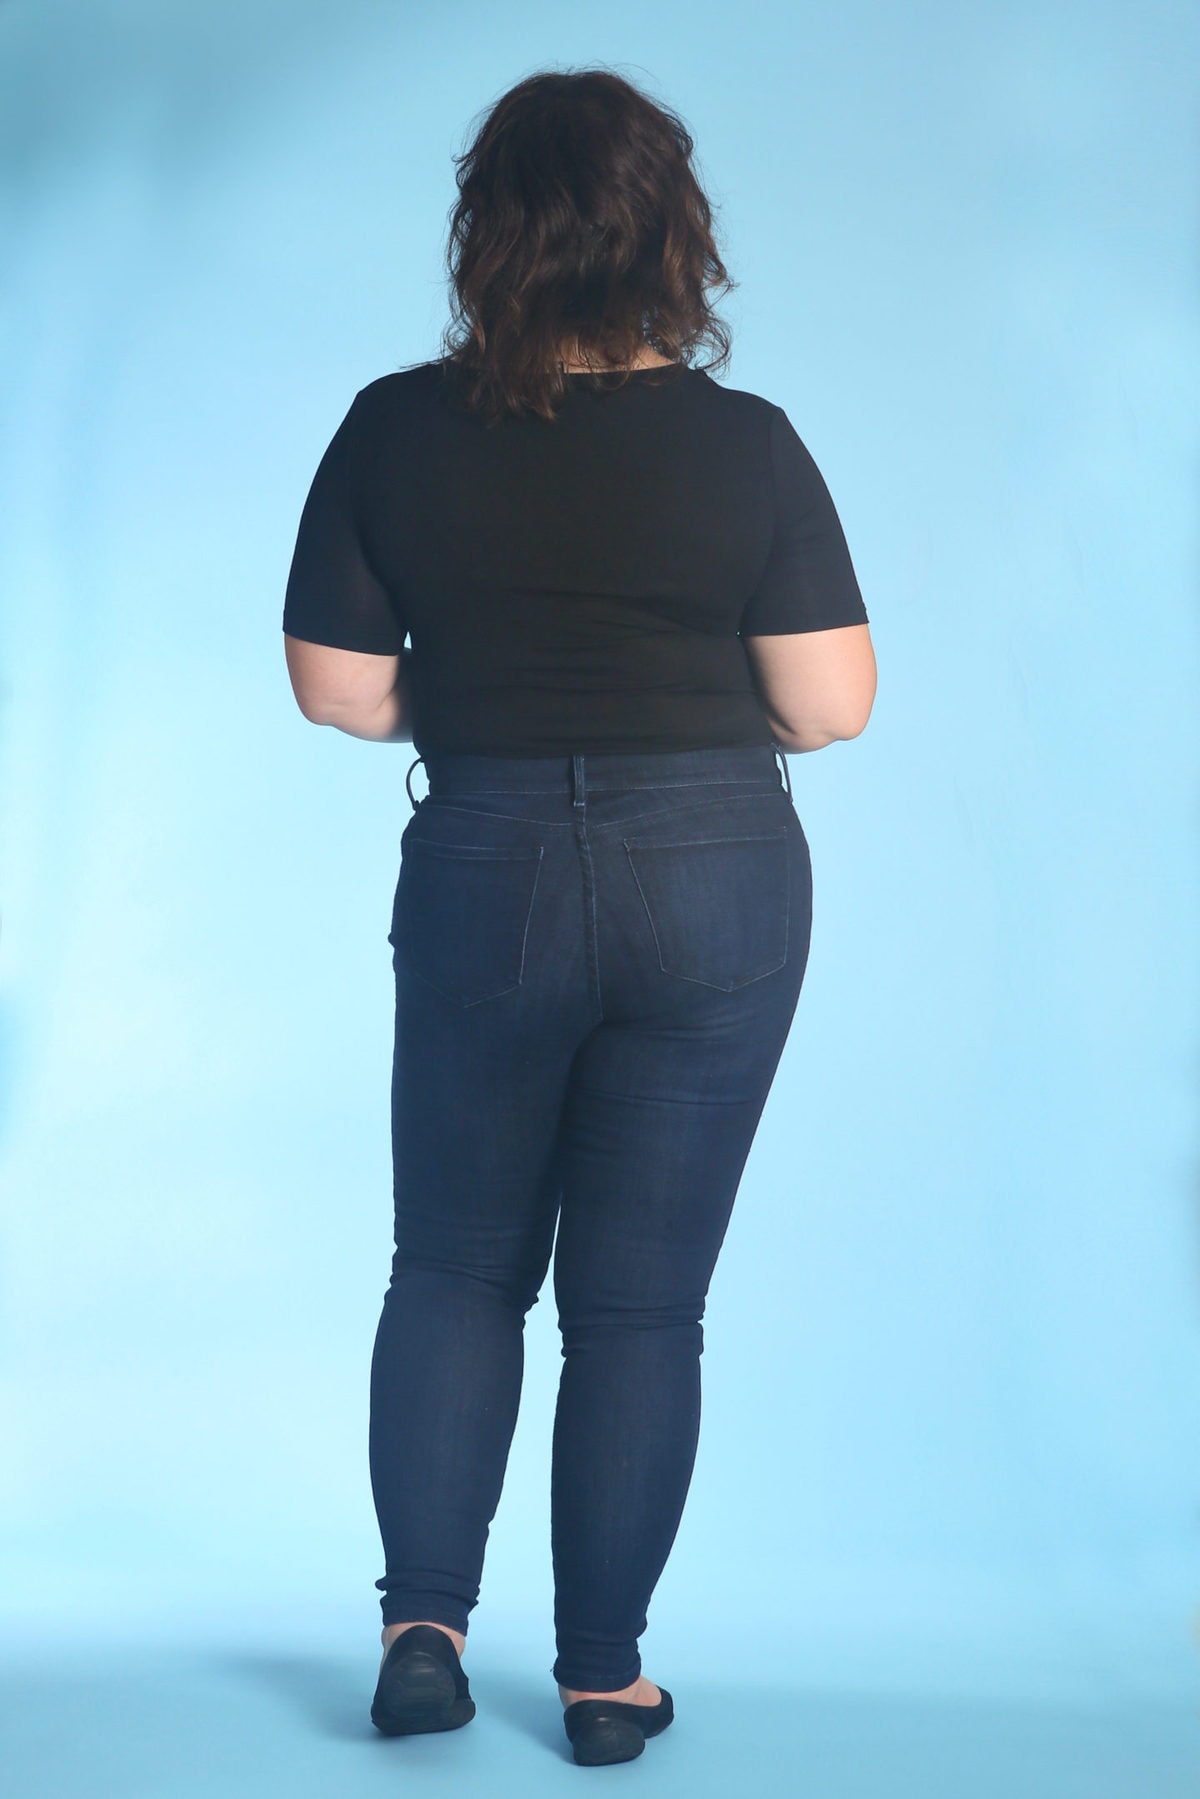 blue desire curvy skinny jeans